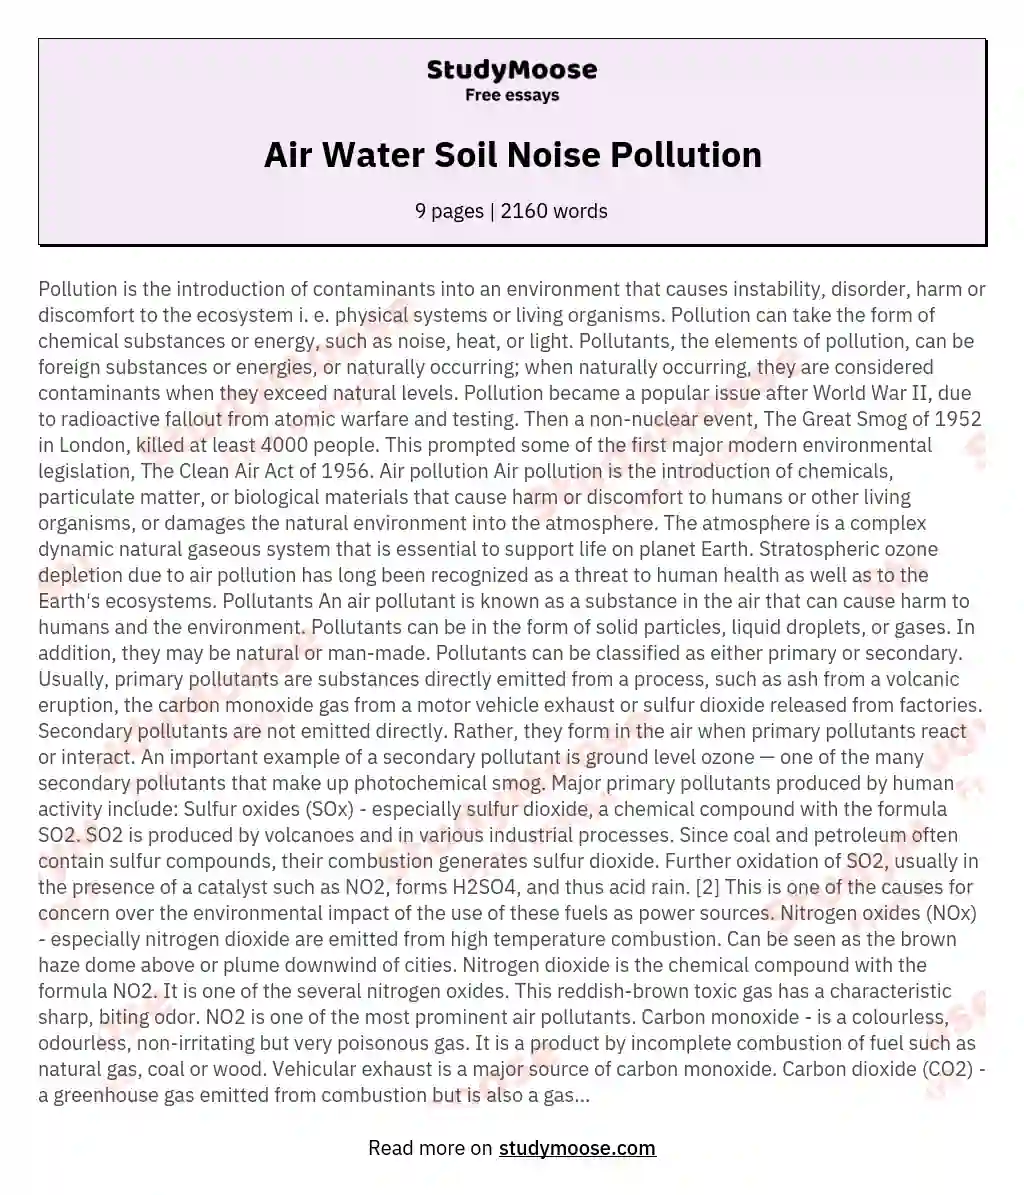 Air Water Soil Noise Pollution essay